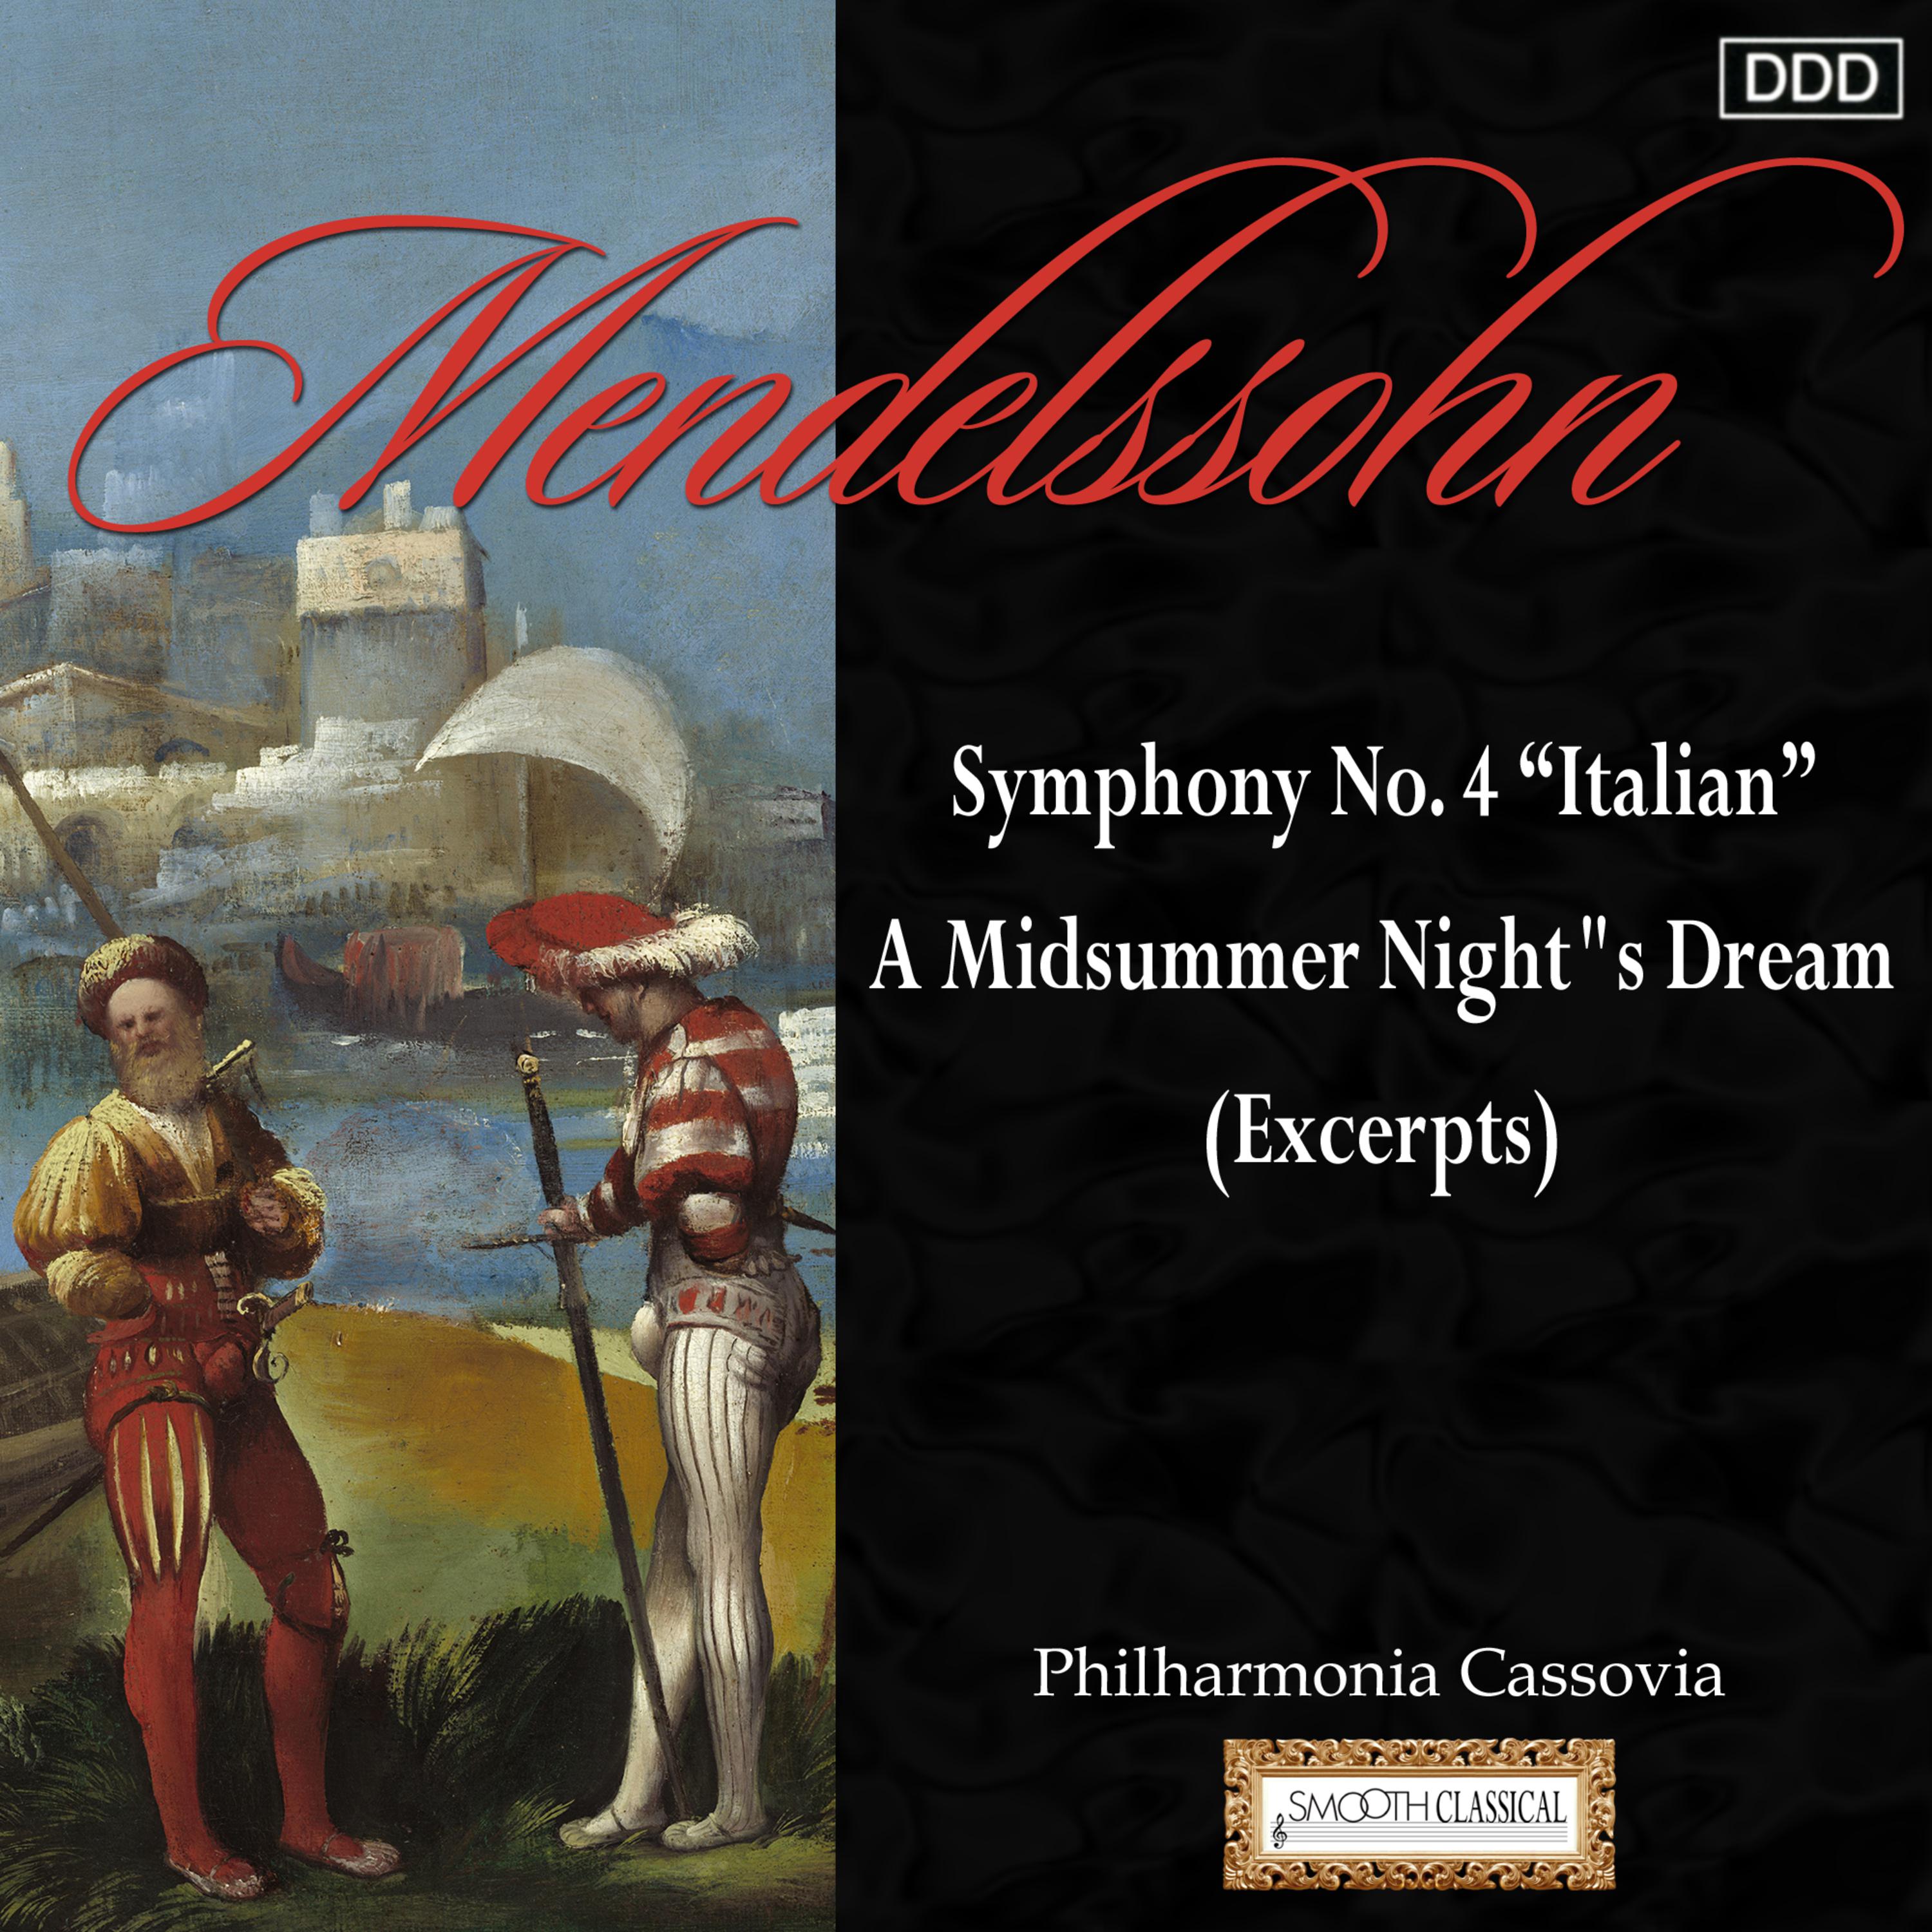 Mendelssohn: Symphony No. 4 "Italian" - A Midsummer Night's Dream (Excerpts)